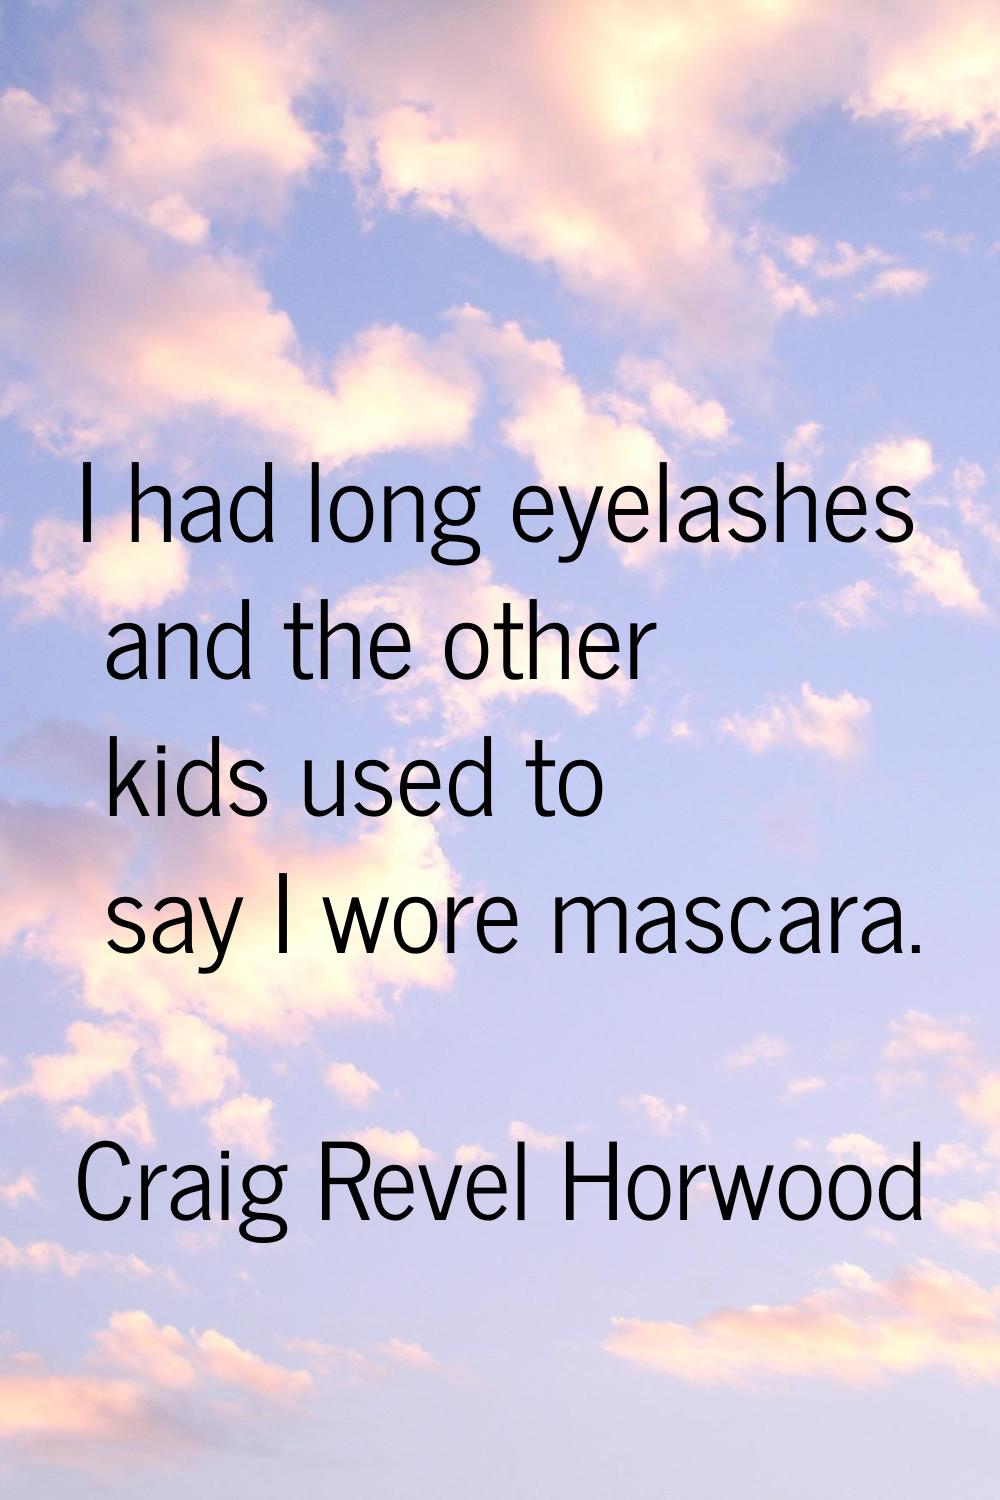 I had long eyelashes and the other kids used to say I wore mascara.